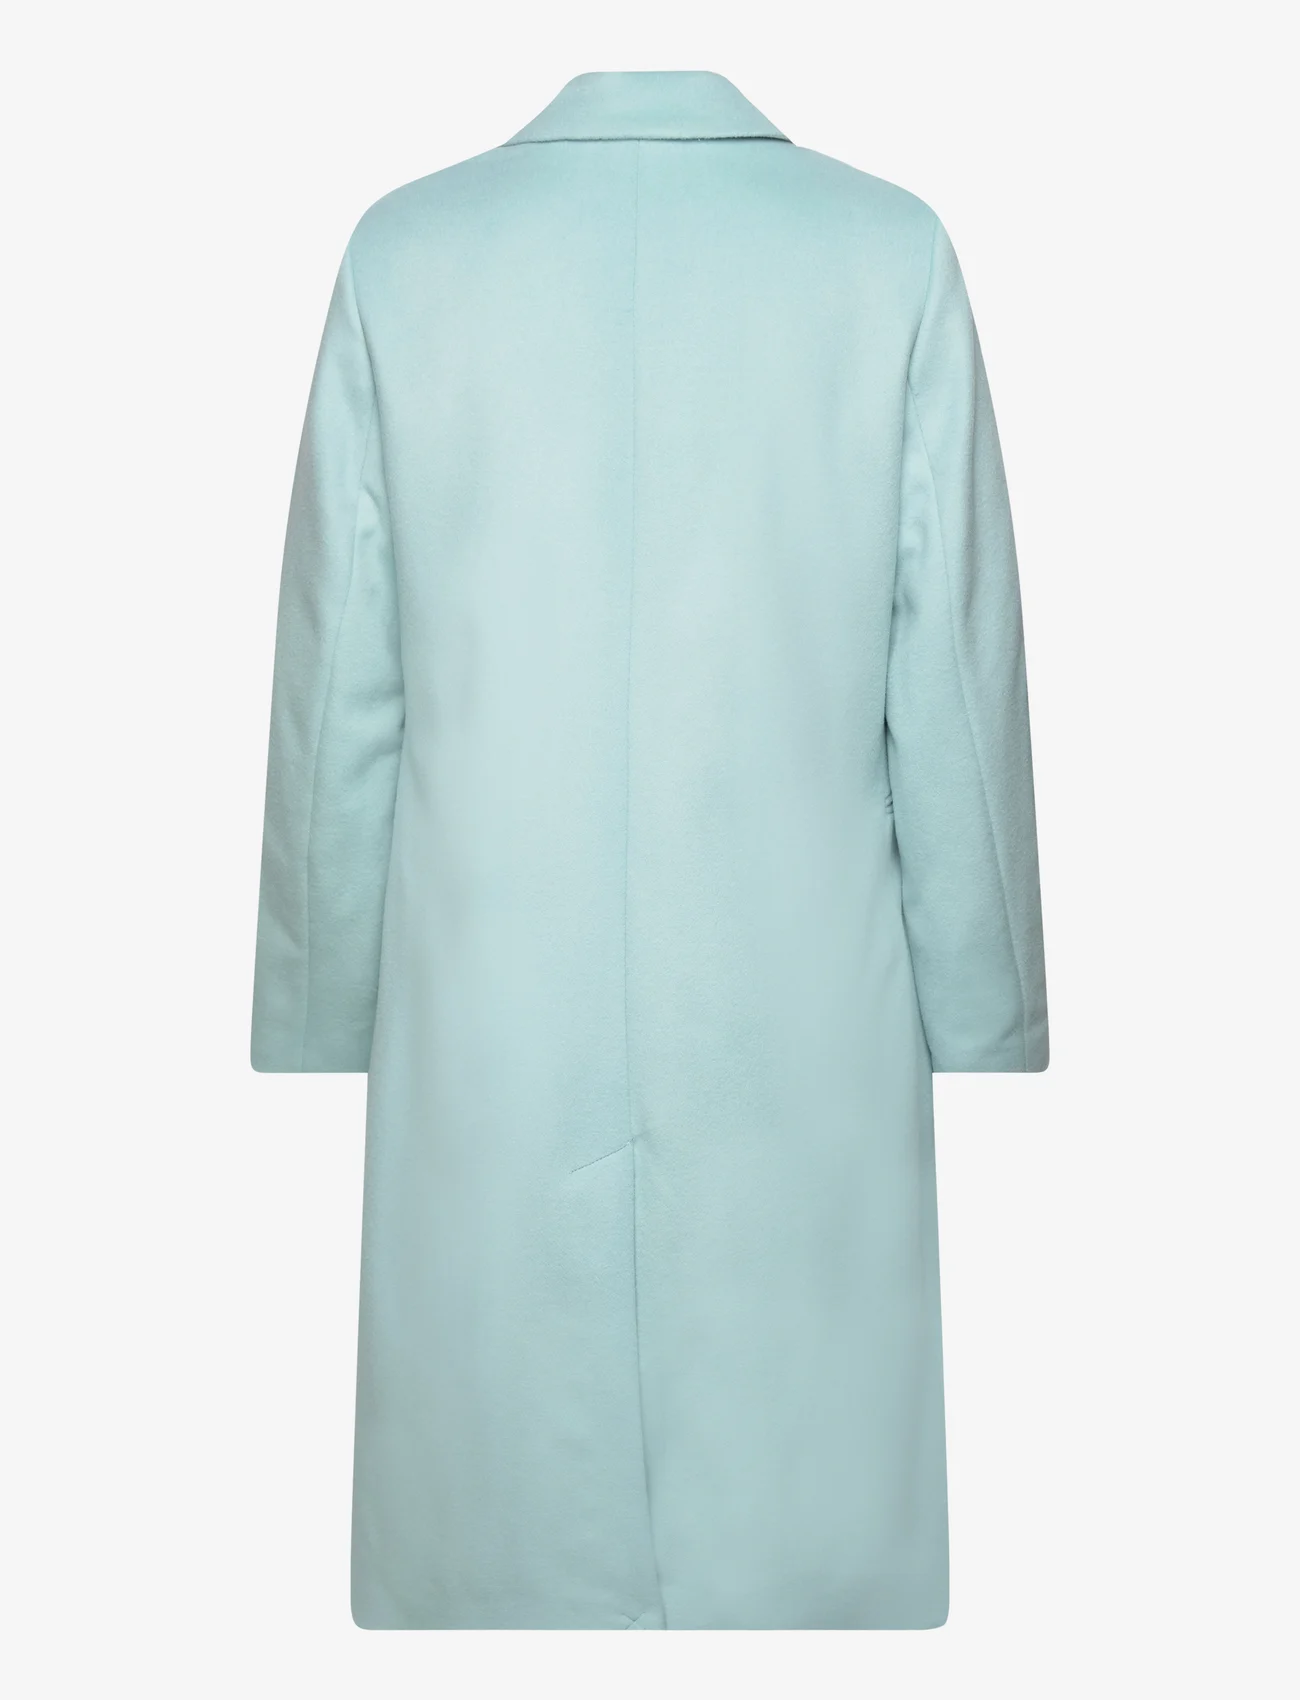 GANT - WOOL BLEND TAILORED COAT - winter coats - dusty turquoise - 1